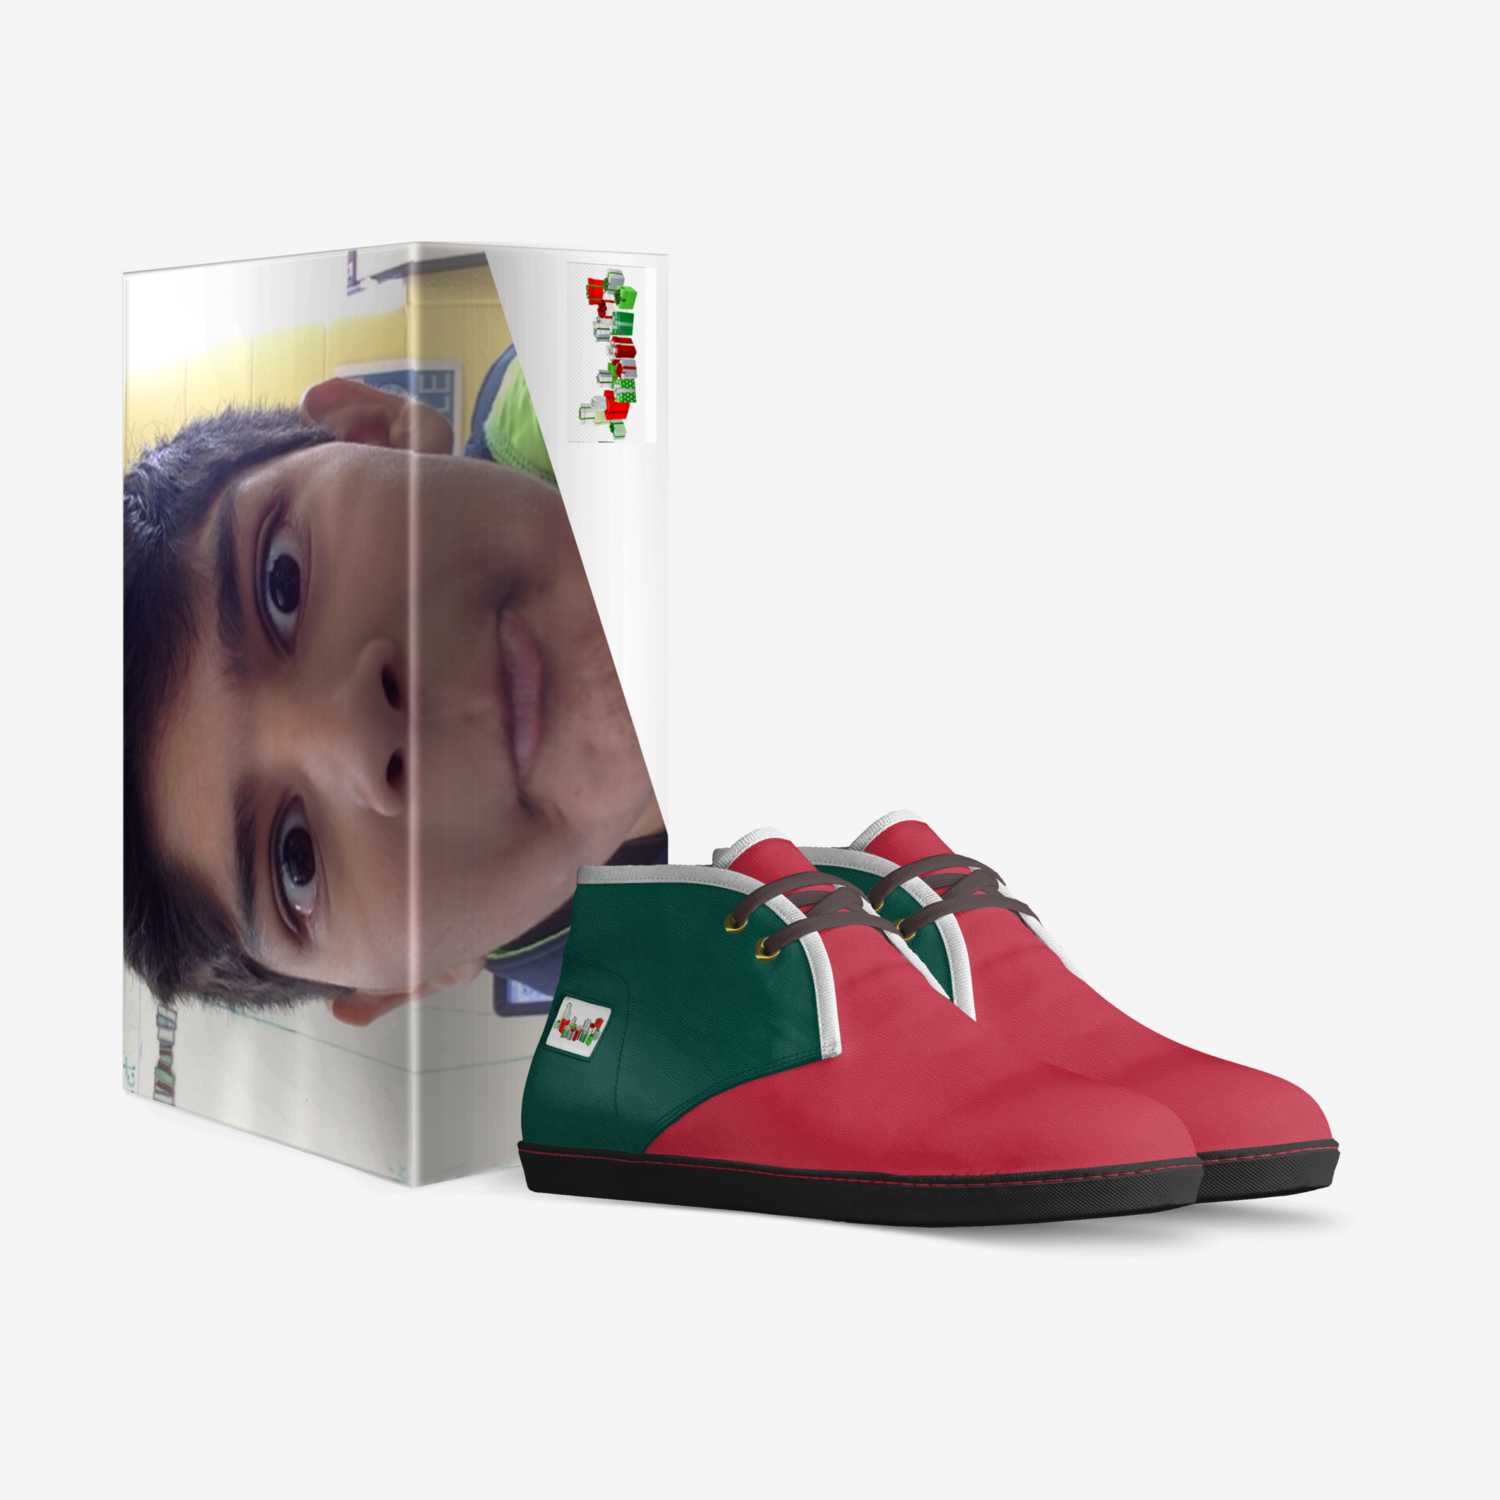 kicks 4 life custom made in Italy shoes by Arjun Pangarkar | Box view